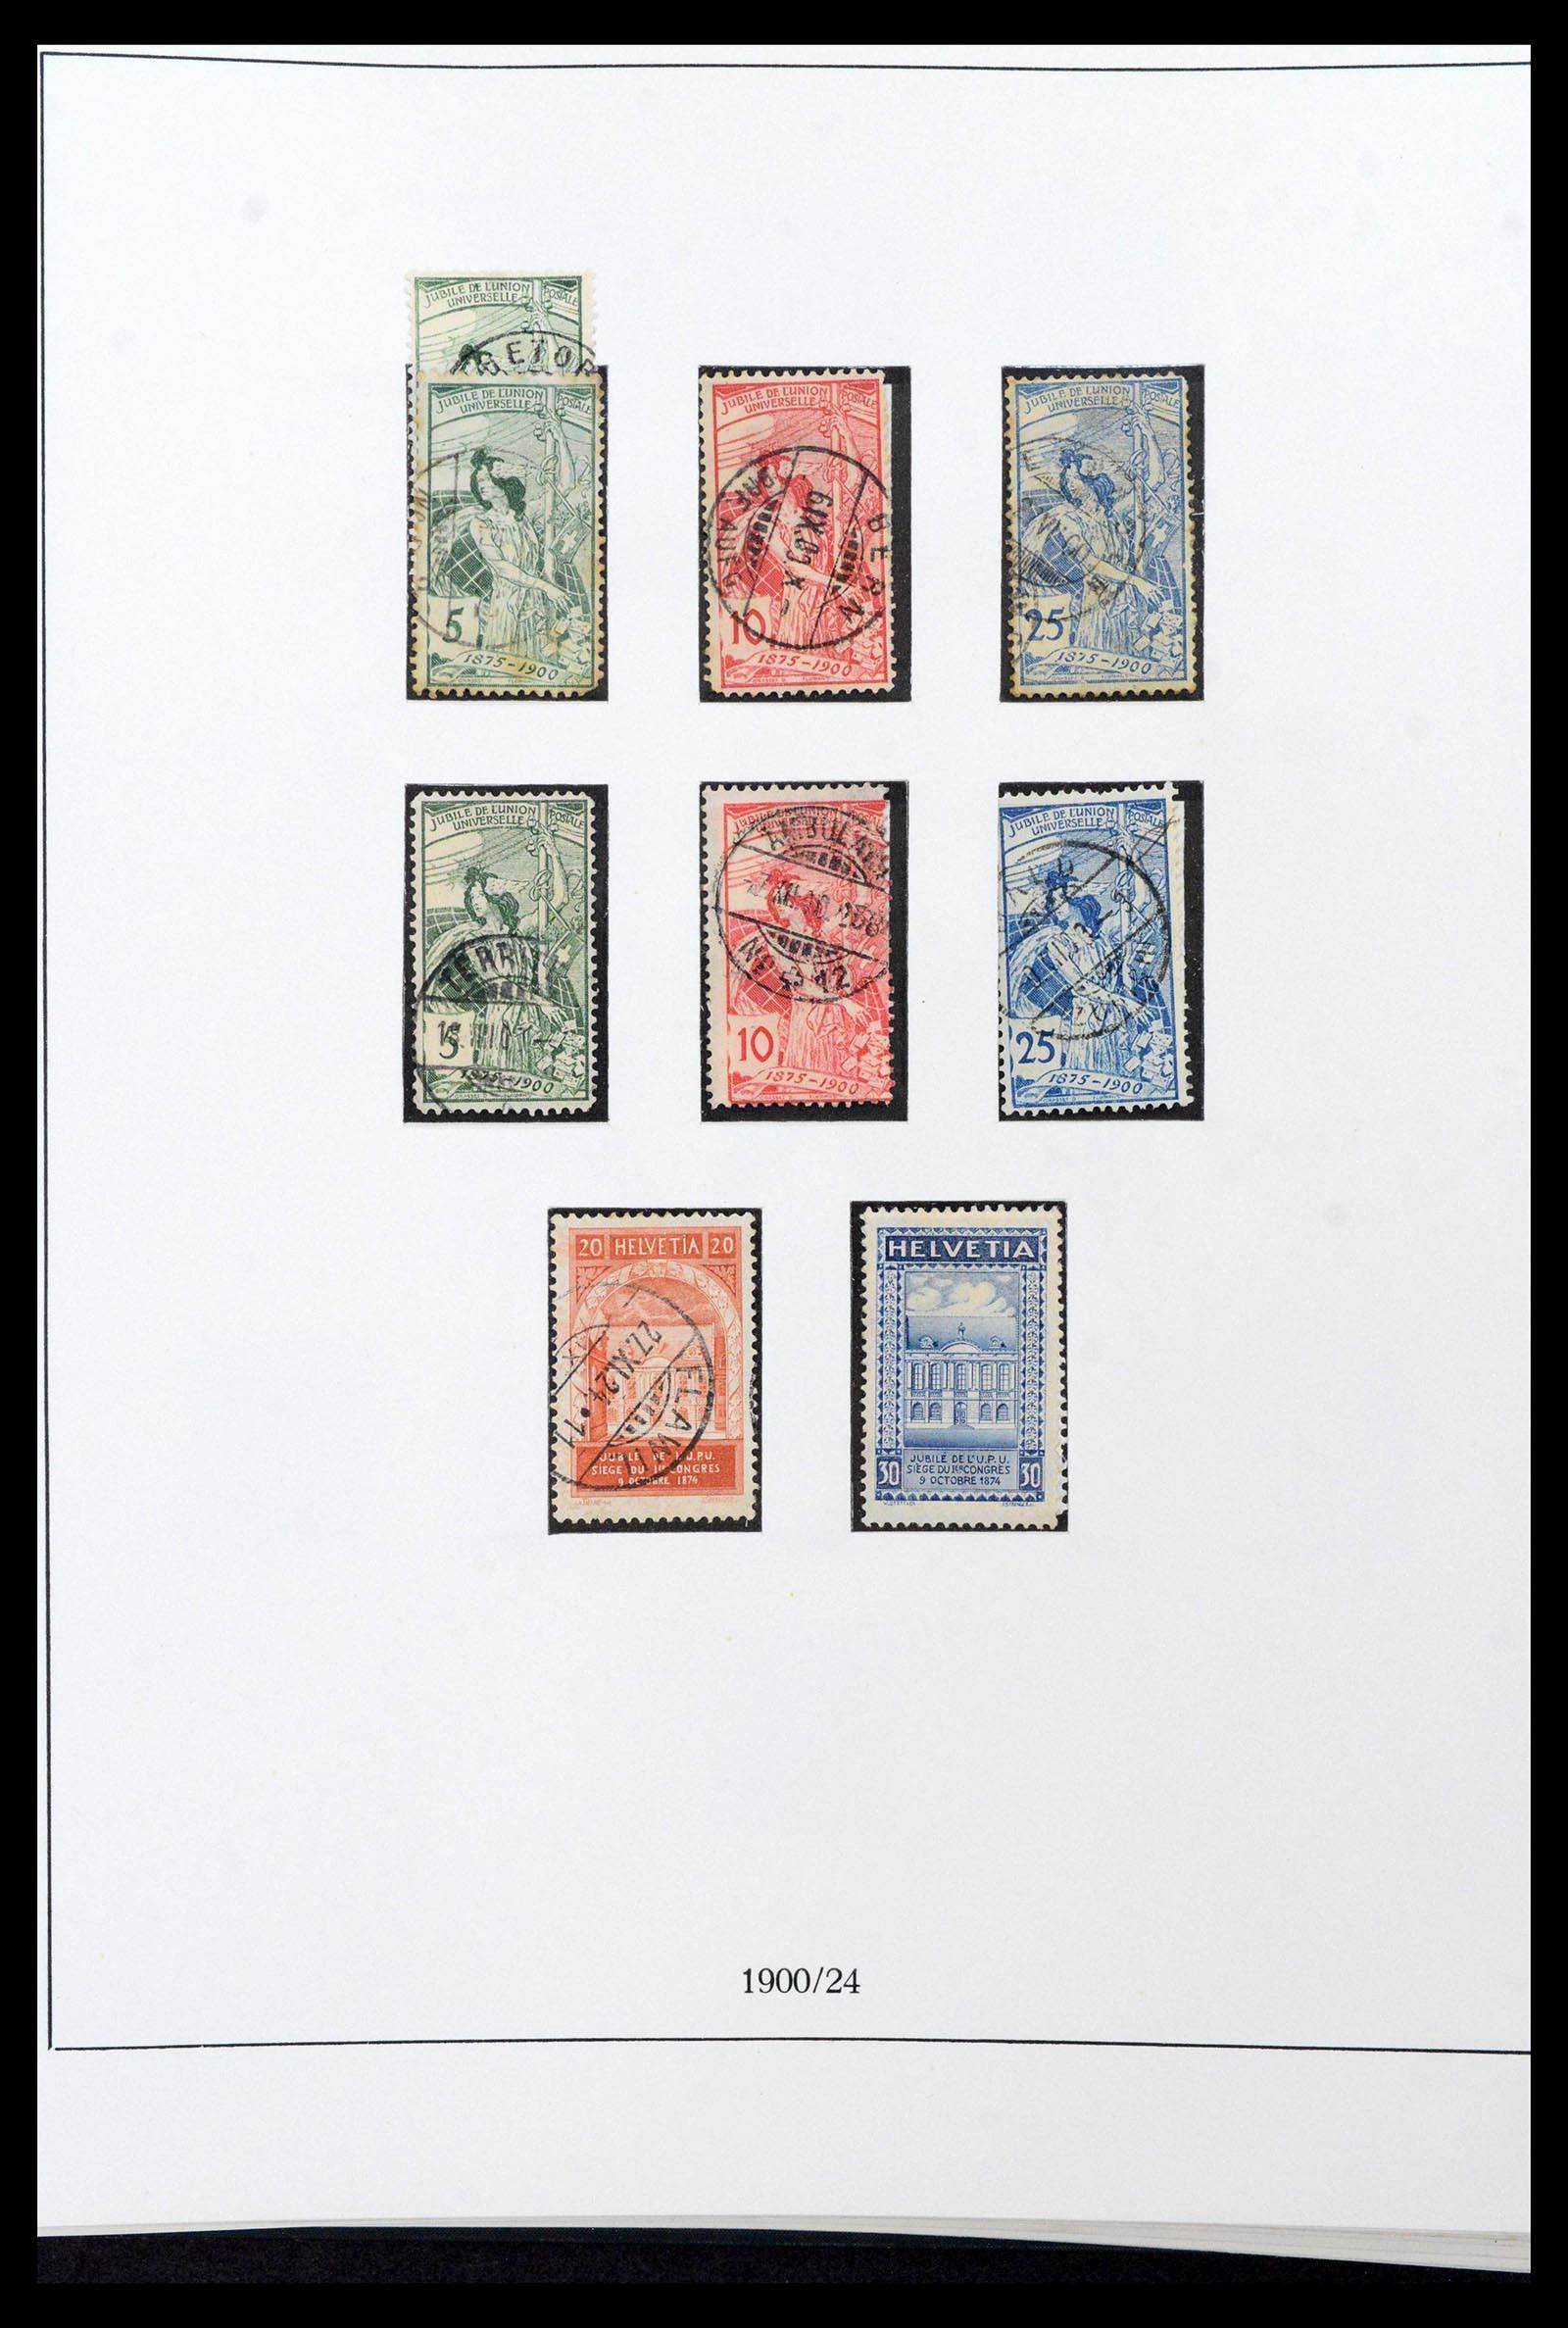 39235 0011 - Stamp collection 39235 Switzerland 1843-1960.